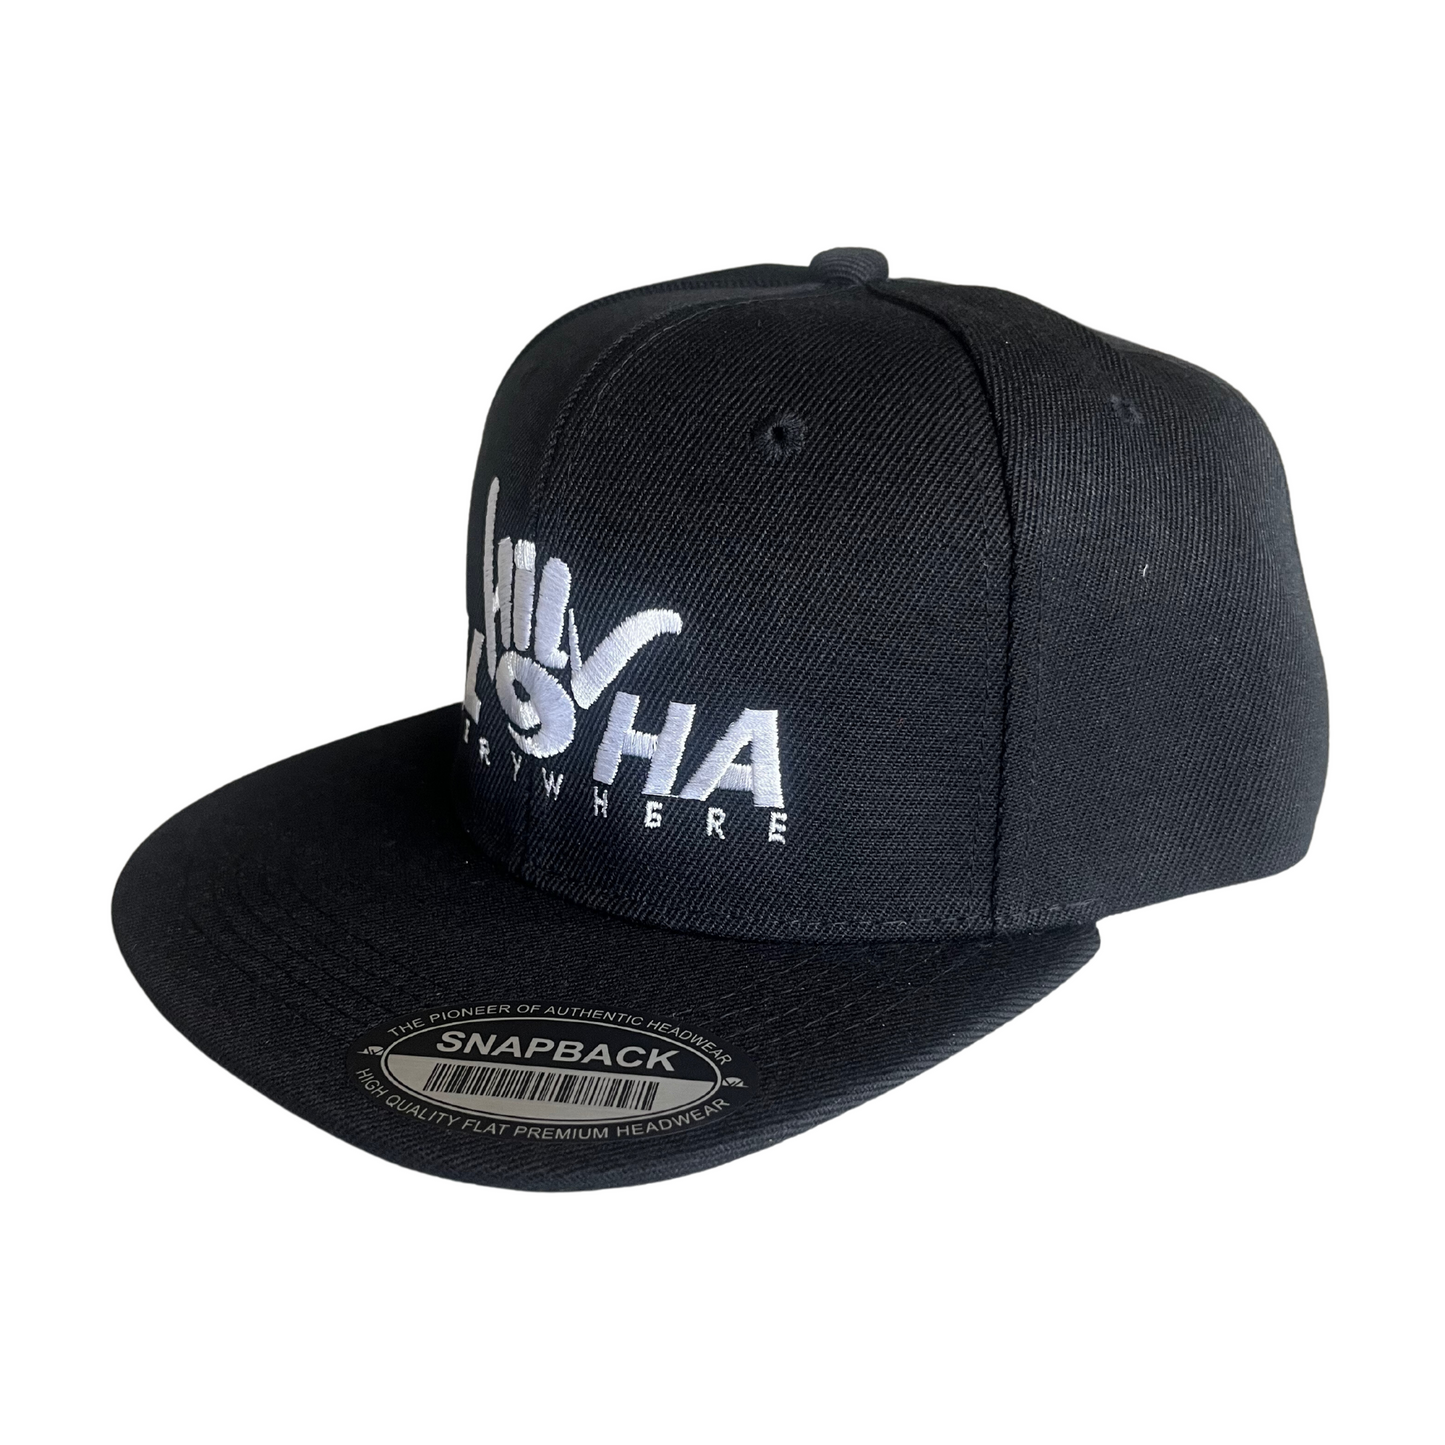 HILV9 Aloha Everywhere Snapback Black and White Hat